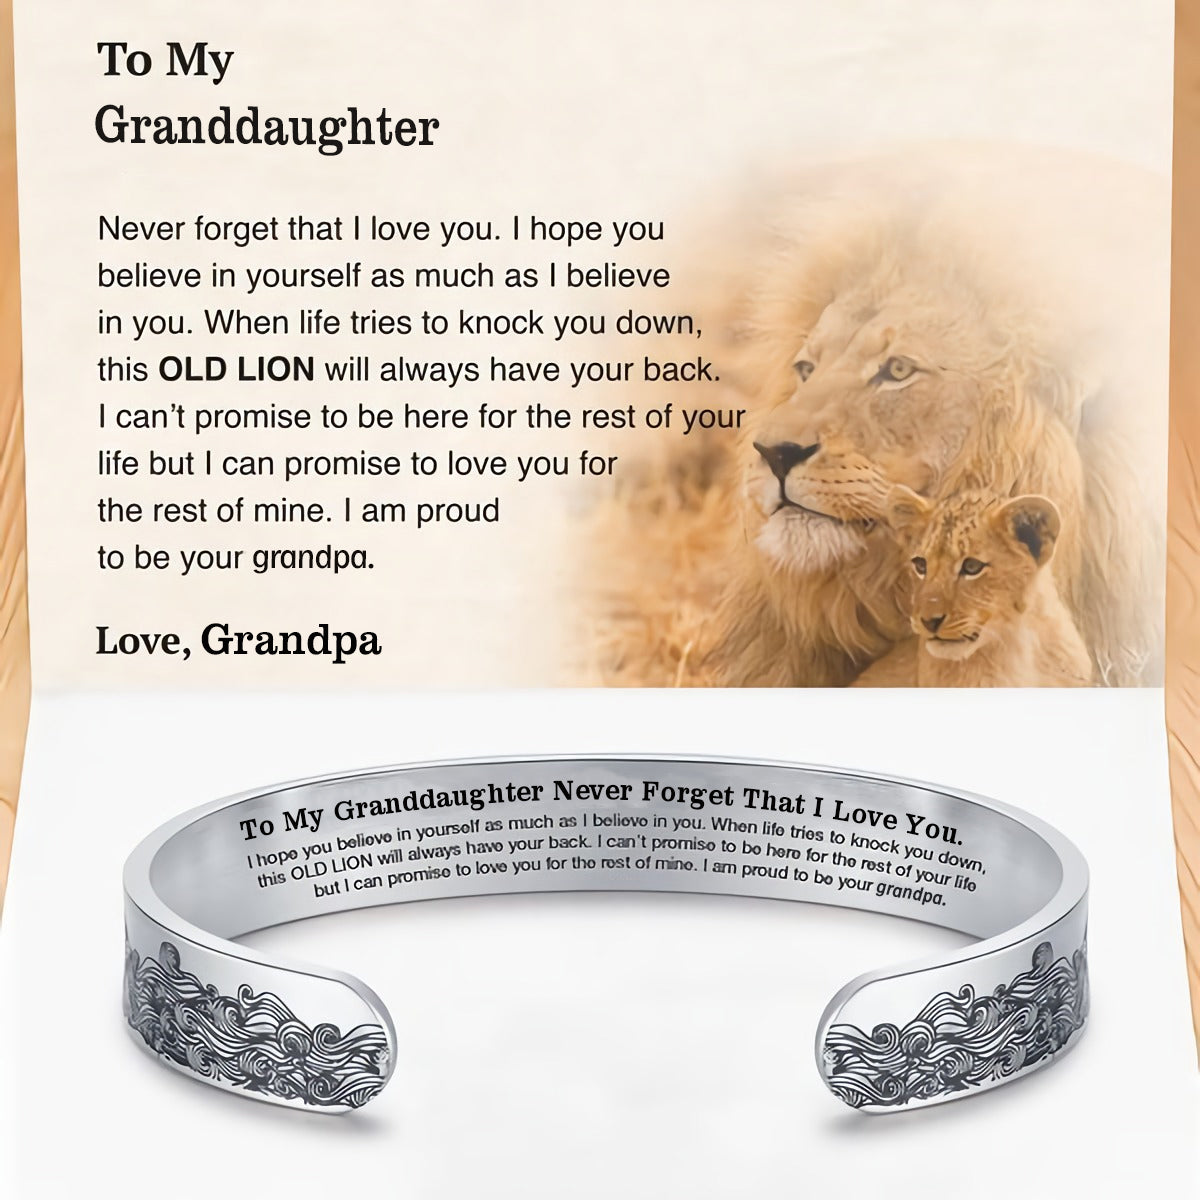 To My Granddaughter Proud of You Love Grandpa Bracelet